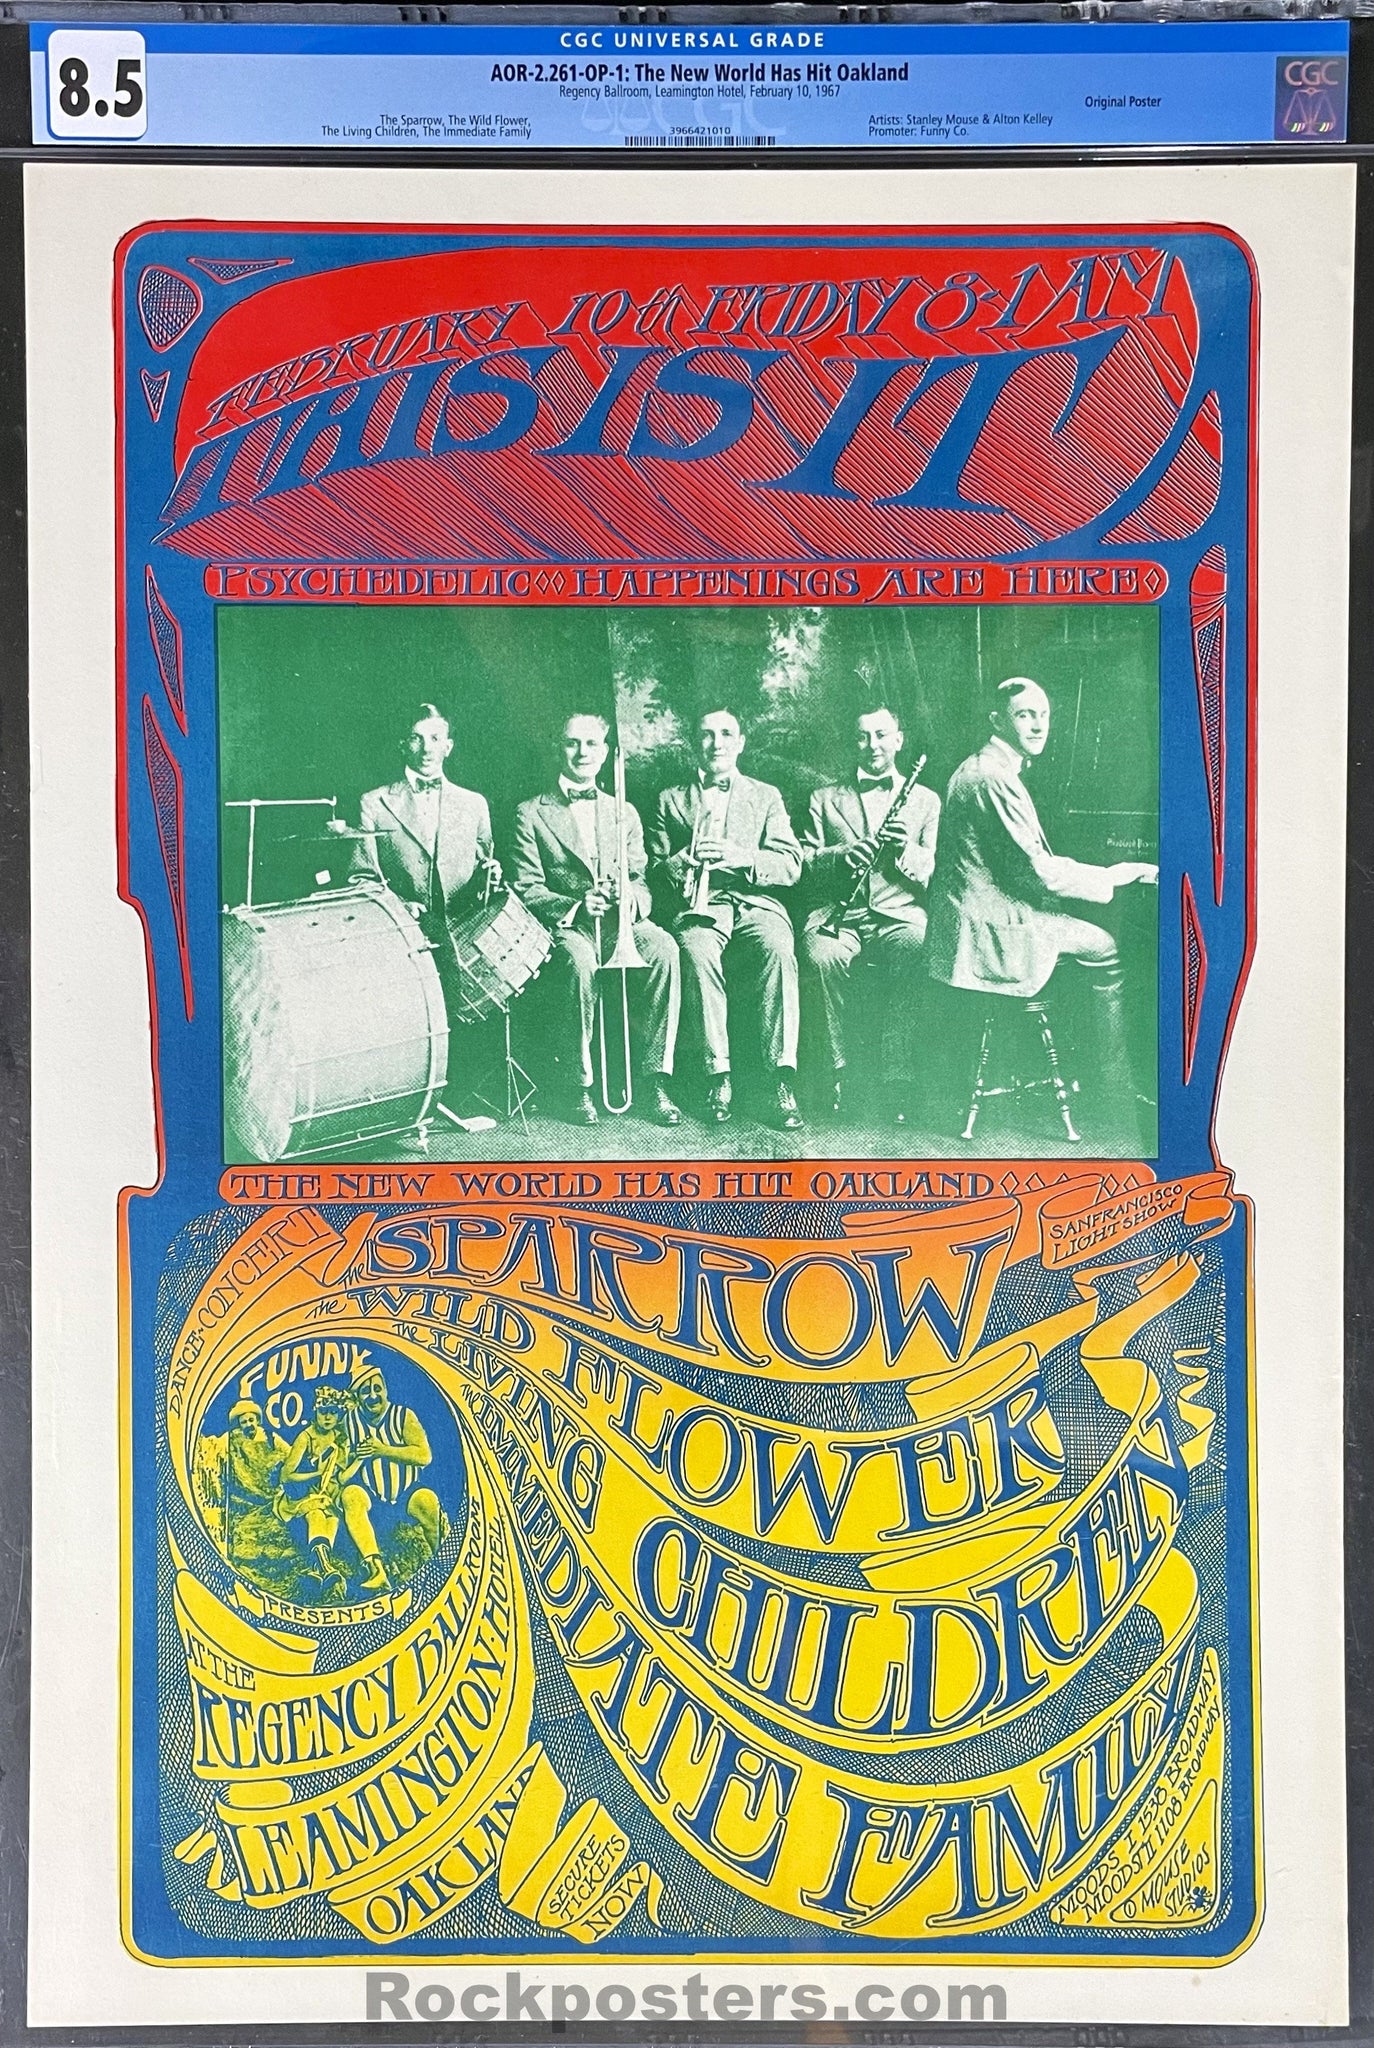 AOR 2.261 - New World Has Hit Oakland - Mouse & Kelley - 1967 Poster - Regency Ballroom  - CGC Graded 8.5